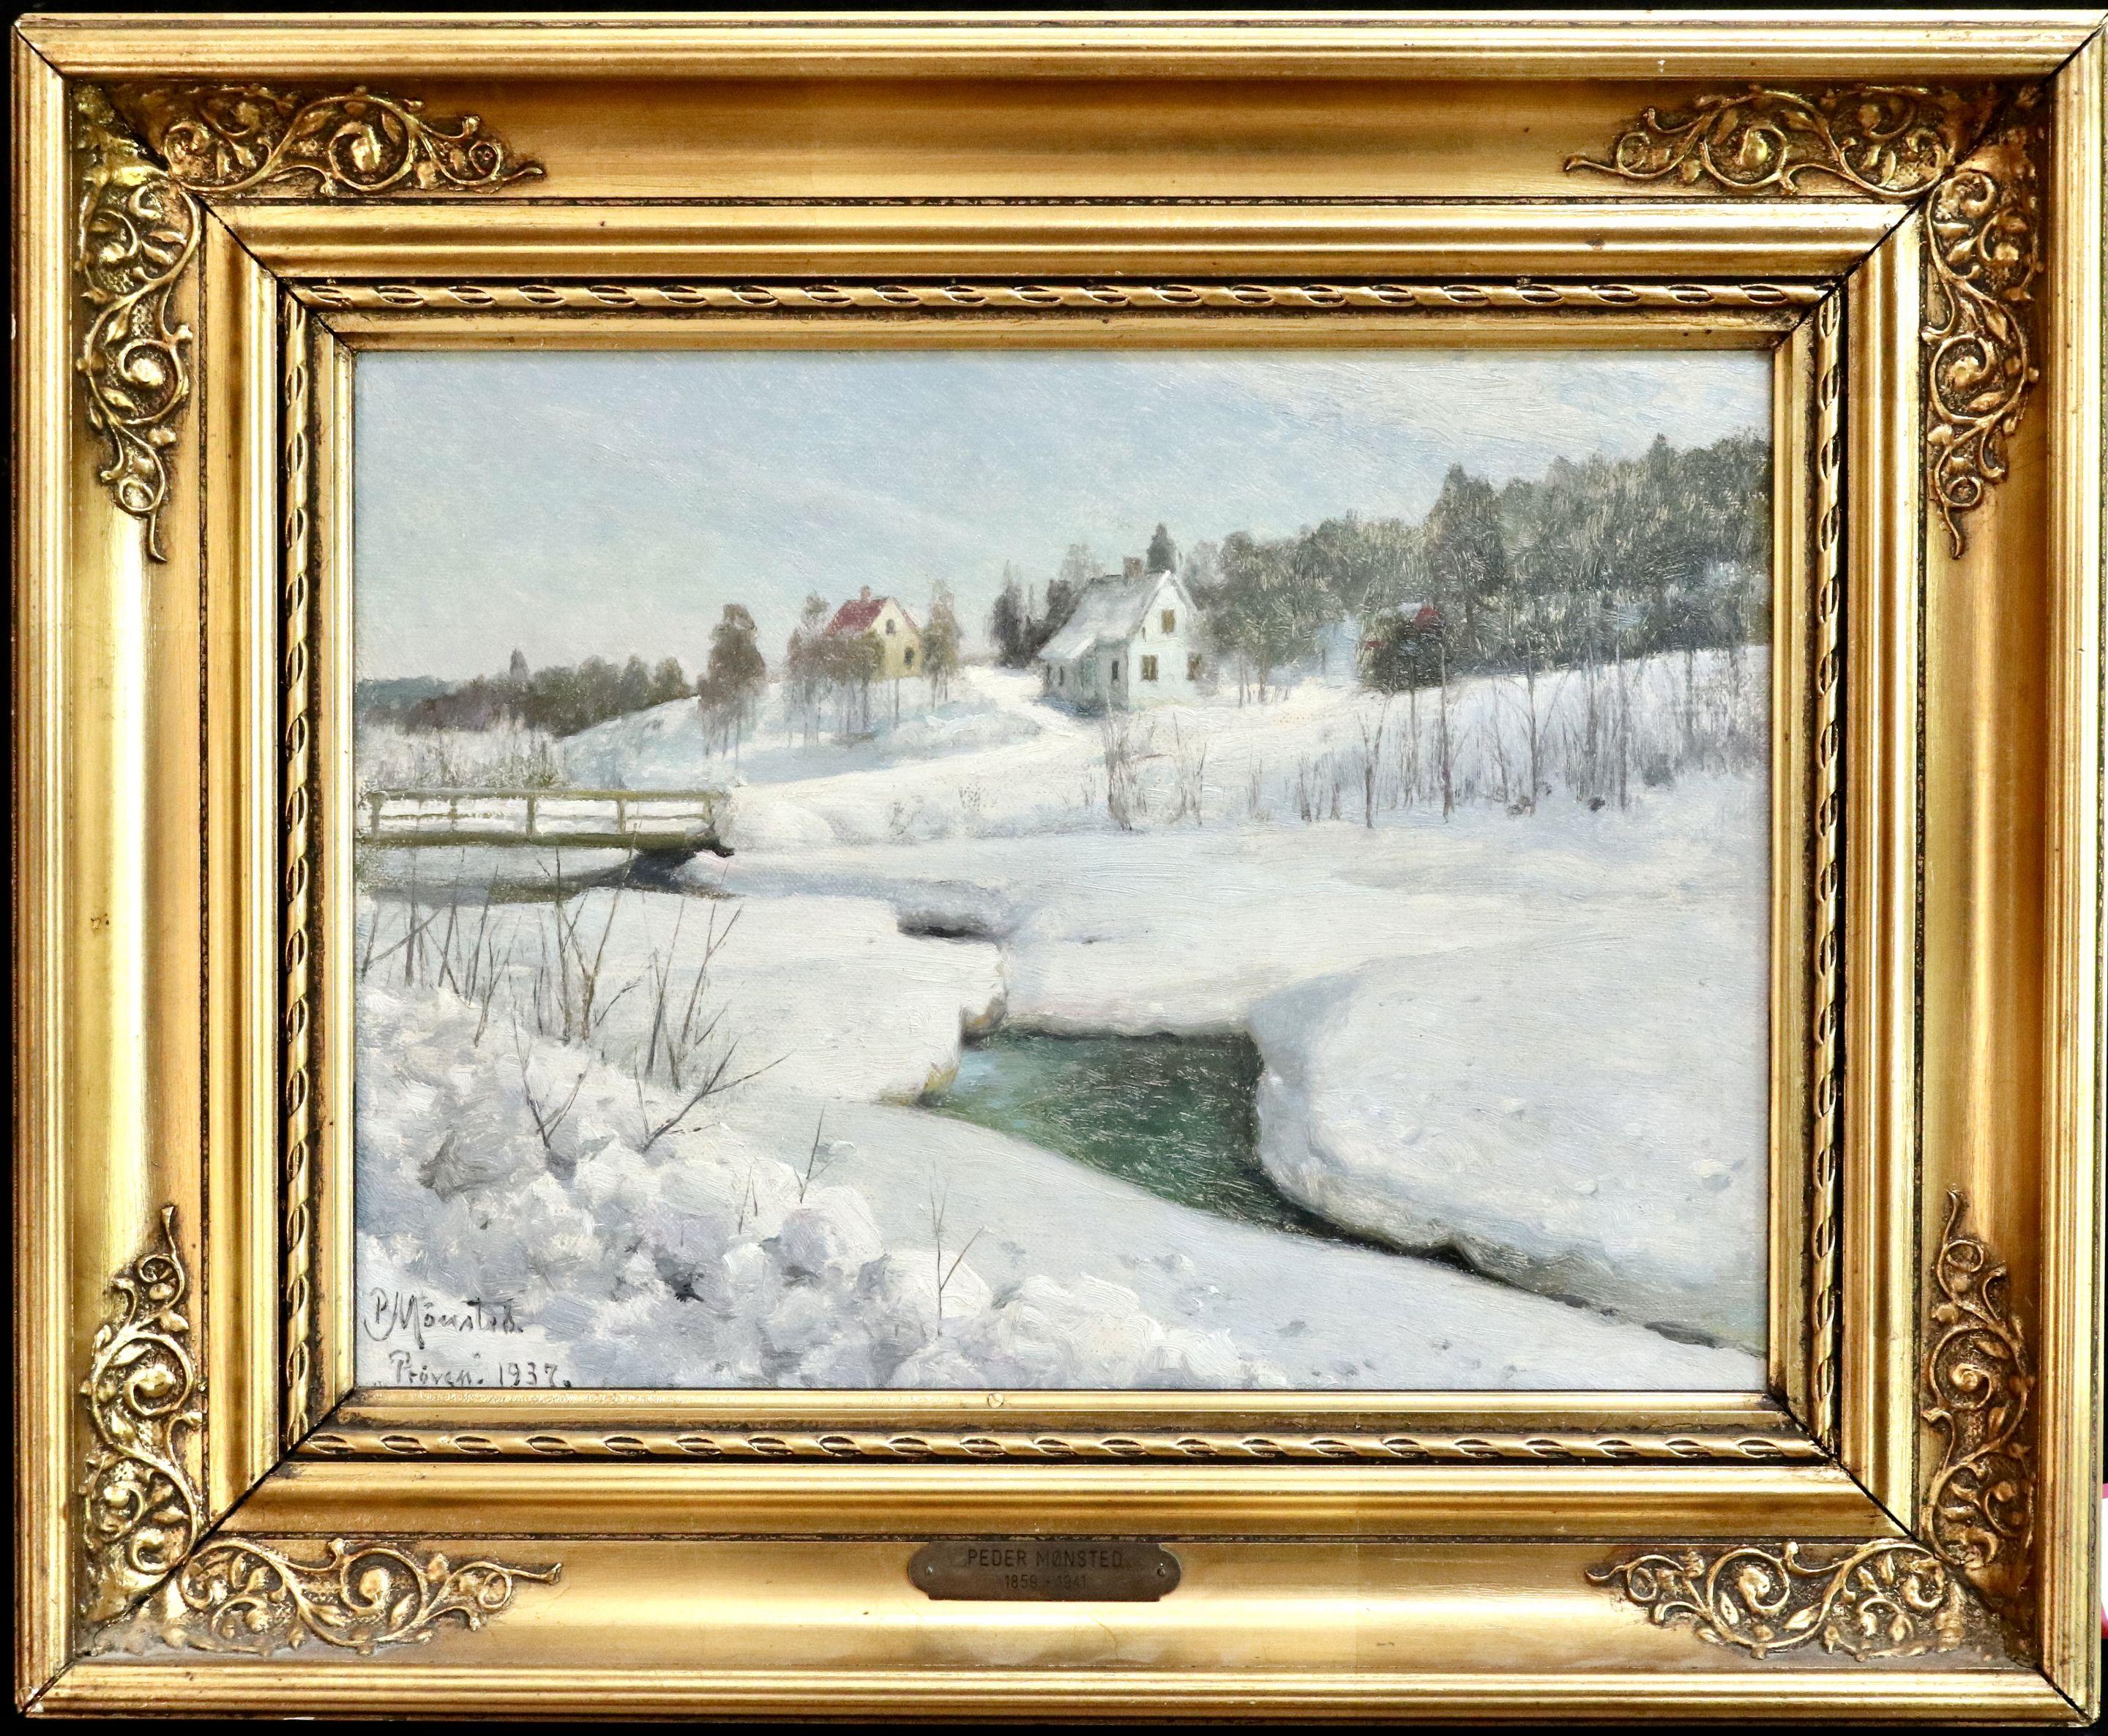 Hundselven, Norway - Winter - 20th Century Oil, Snow Landscape by Peder Monsted - Painting by Peder Mørk Mønsted